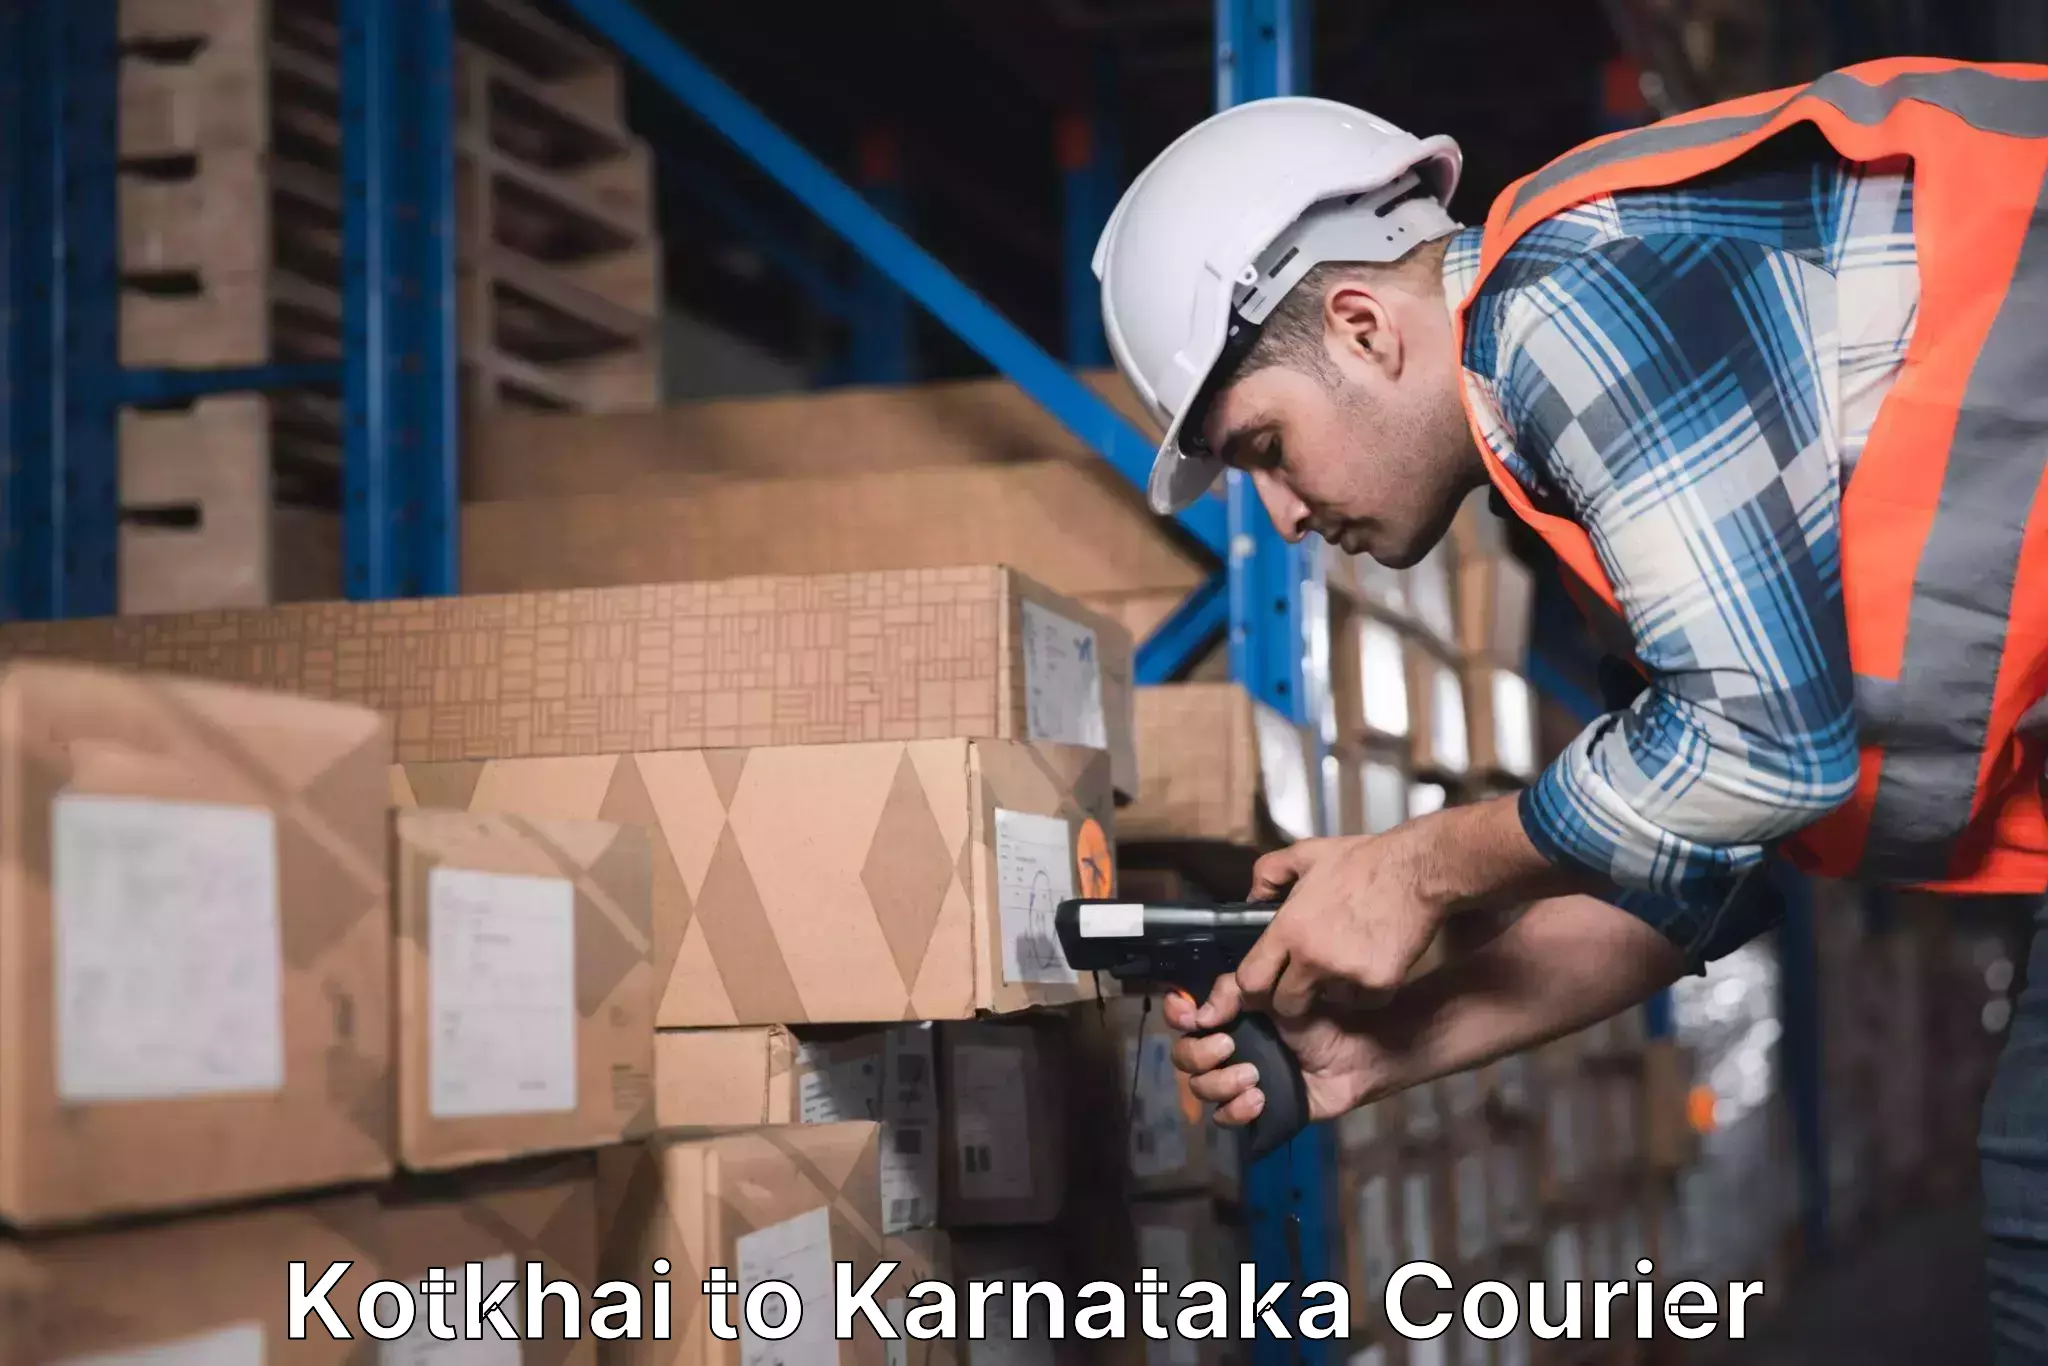 24/7 courier service in Kotkhai to Kanakapura